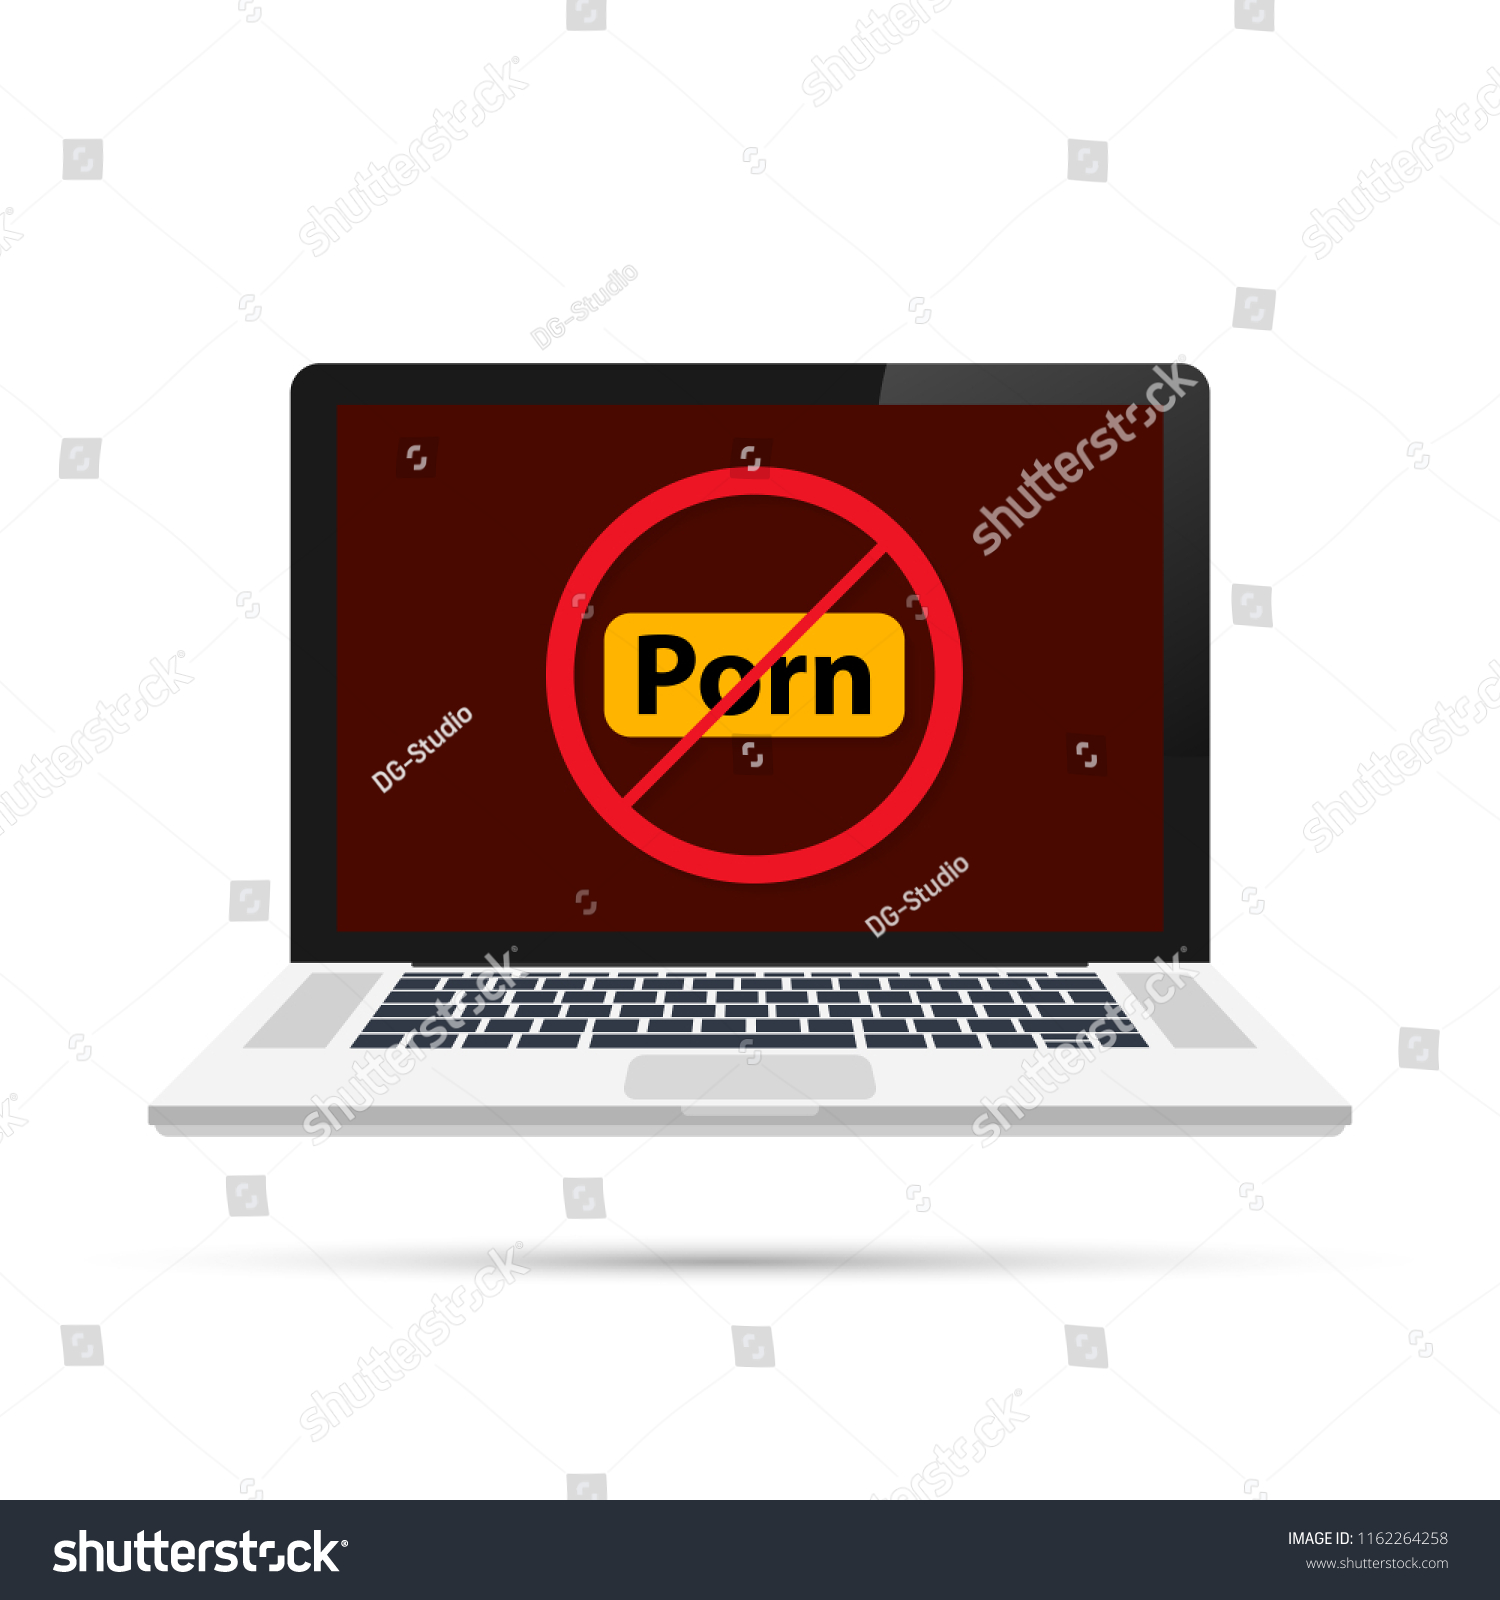 No porno icon on laptop screen on white background. Vector stock illustration.